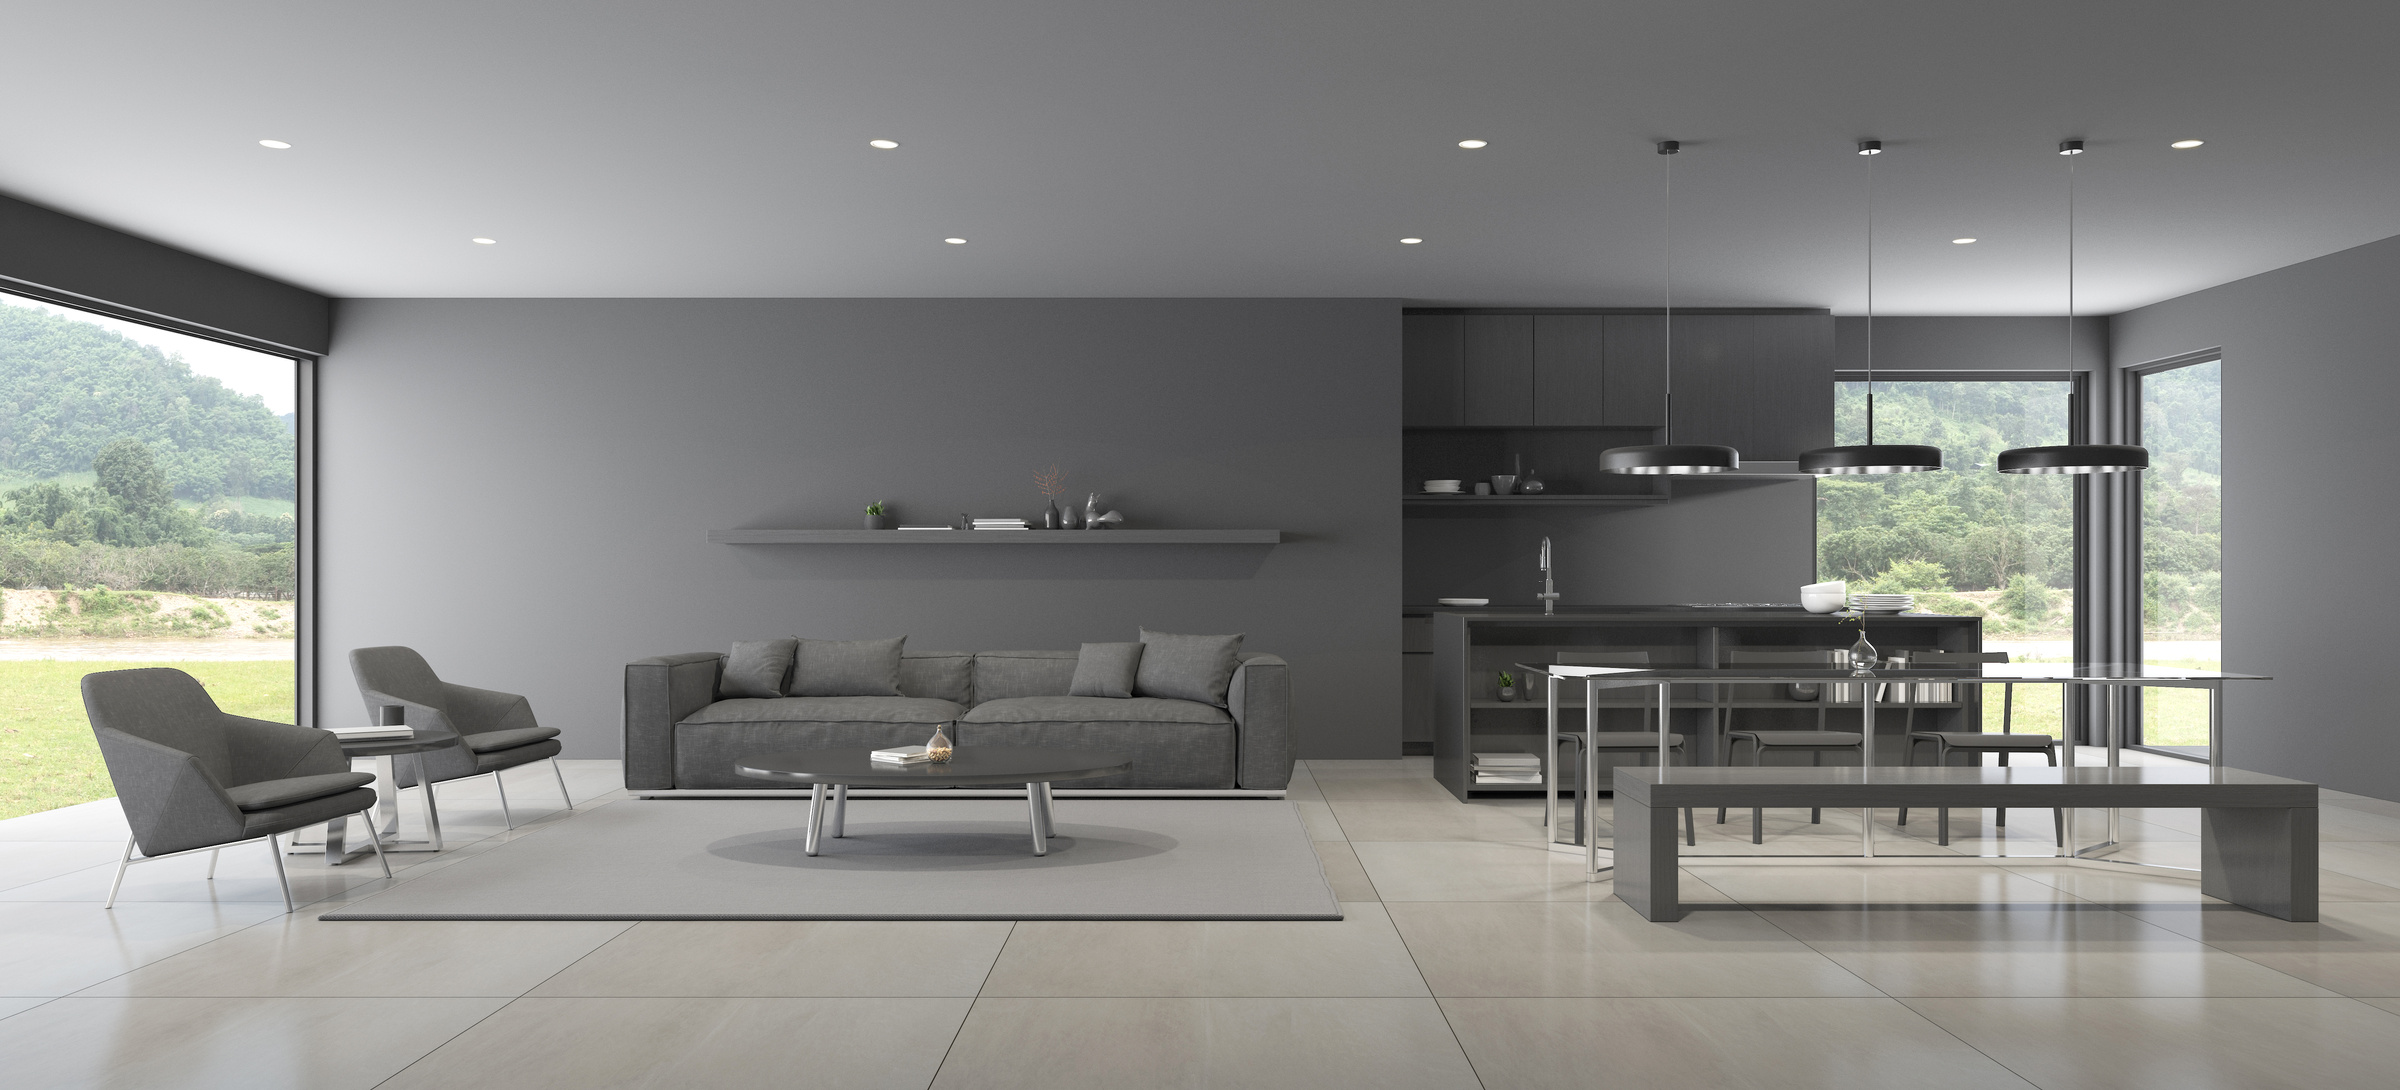 3D Render of Modern Living Room